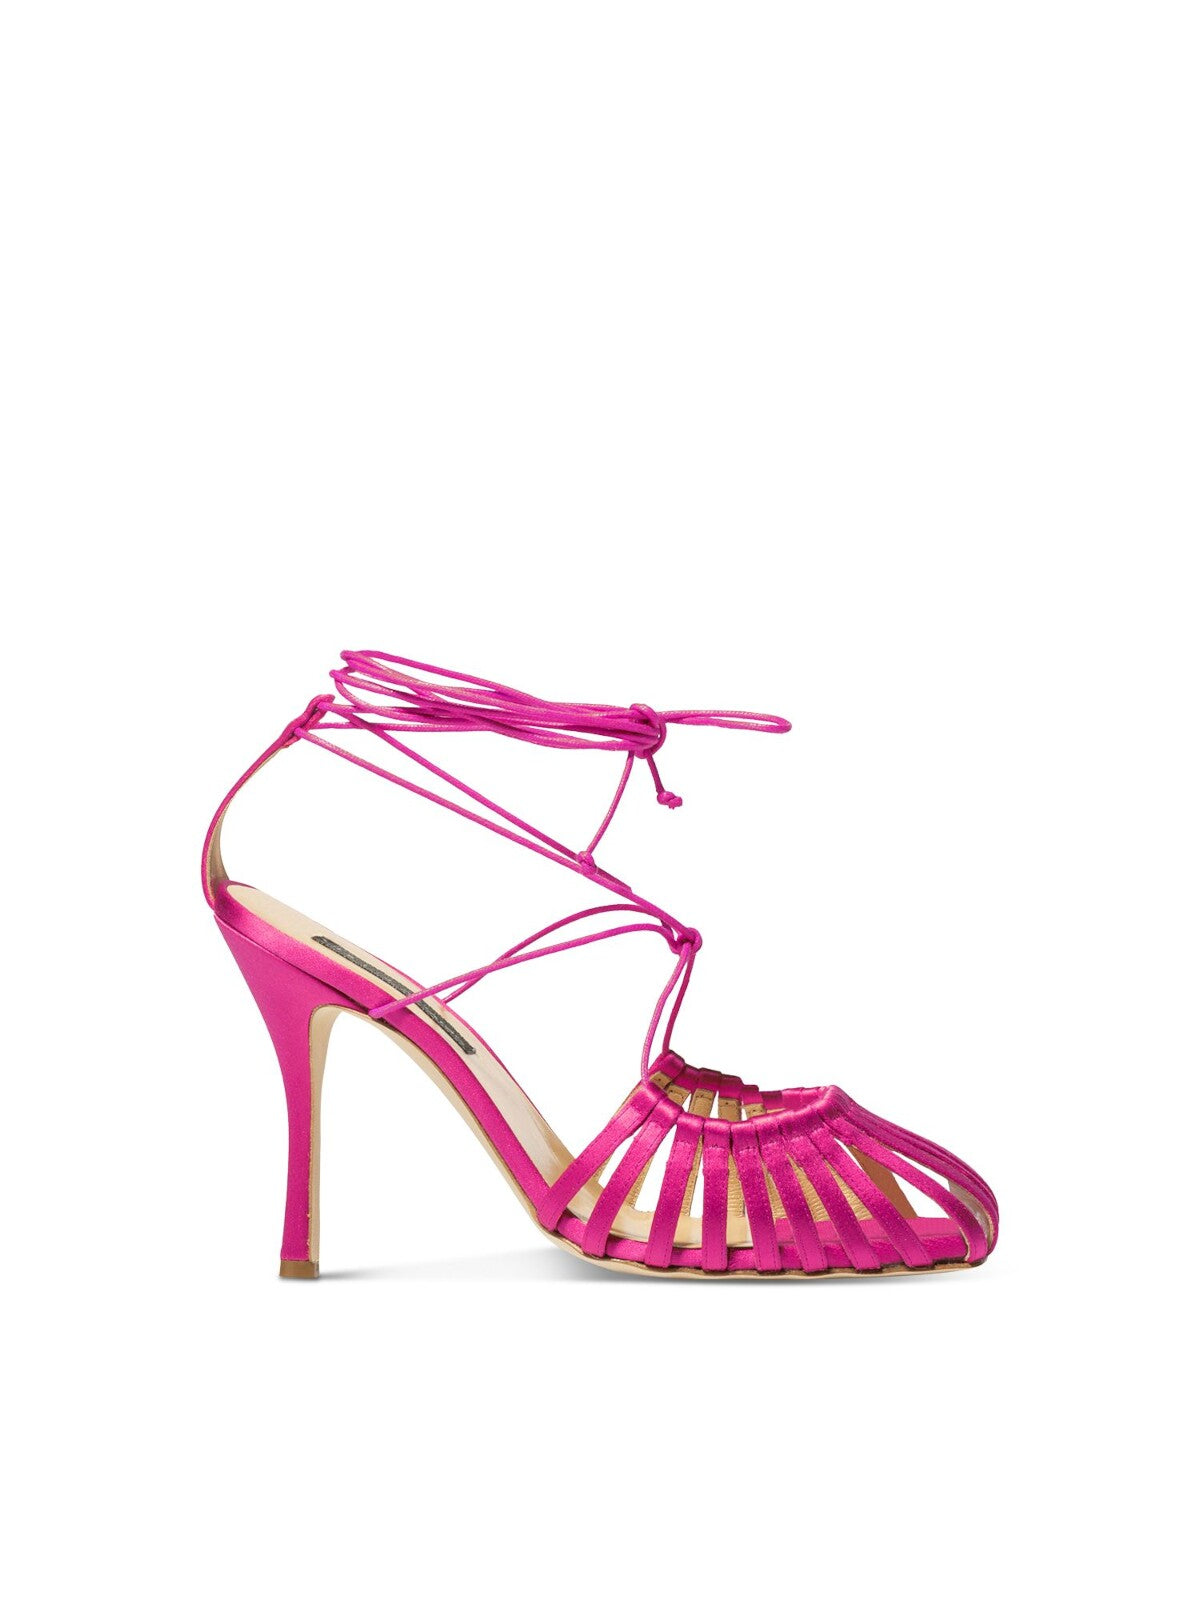 CHELSEA PARIS Womens Pink Strappy Finn Open Toe Stiletto Lace-Up Leather Dress Pumps Shoes 36